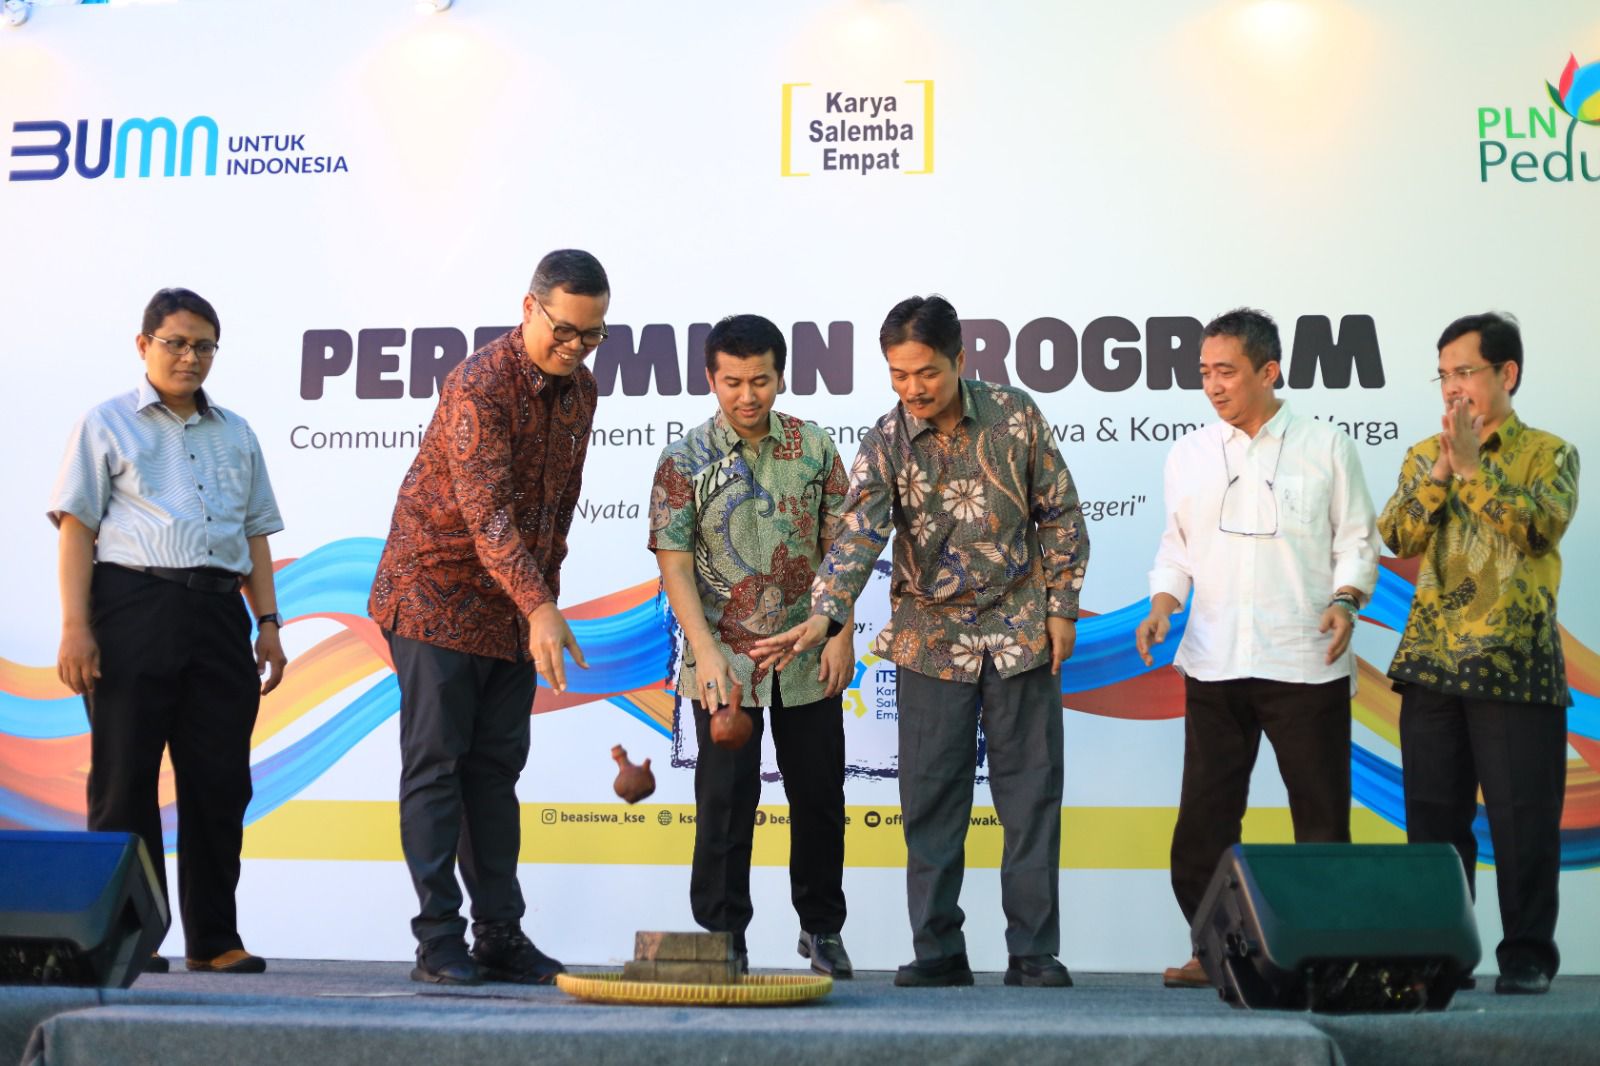 PLN dan Wagub Jatim Resmikan Community Development Program Beasiswa KSE di Surabaya